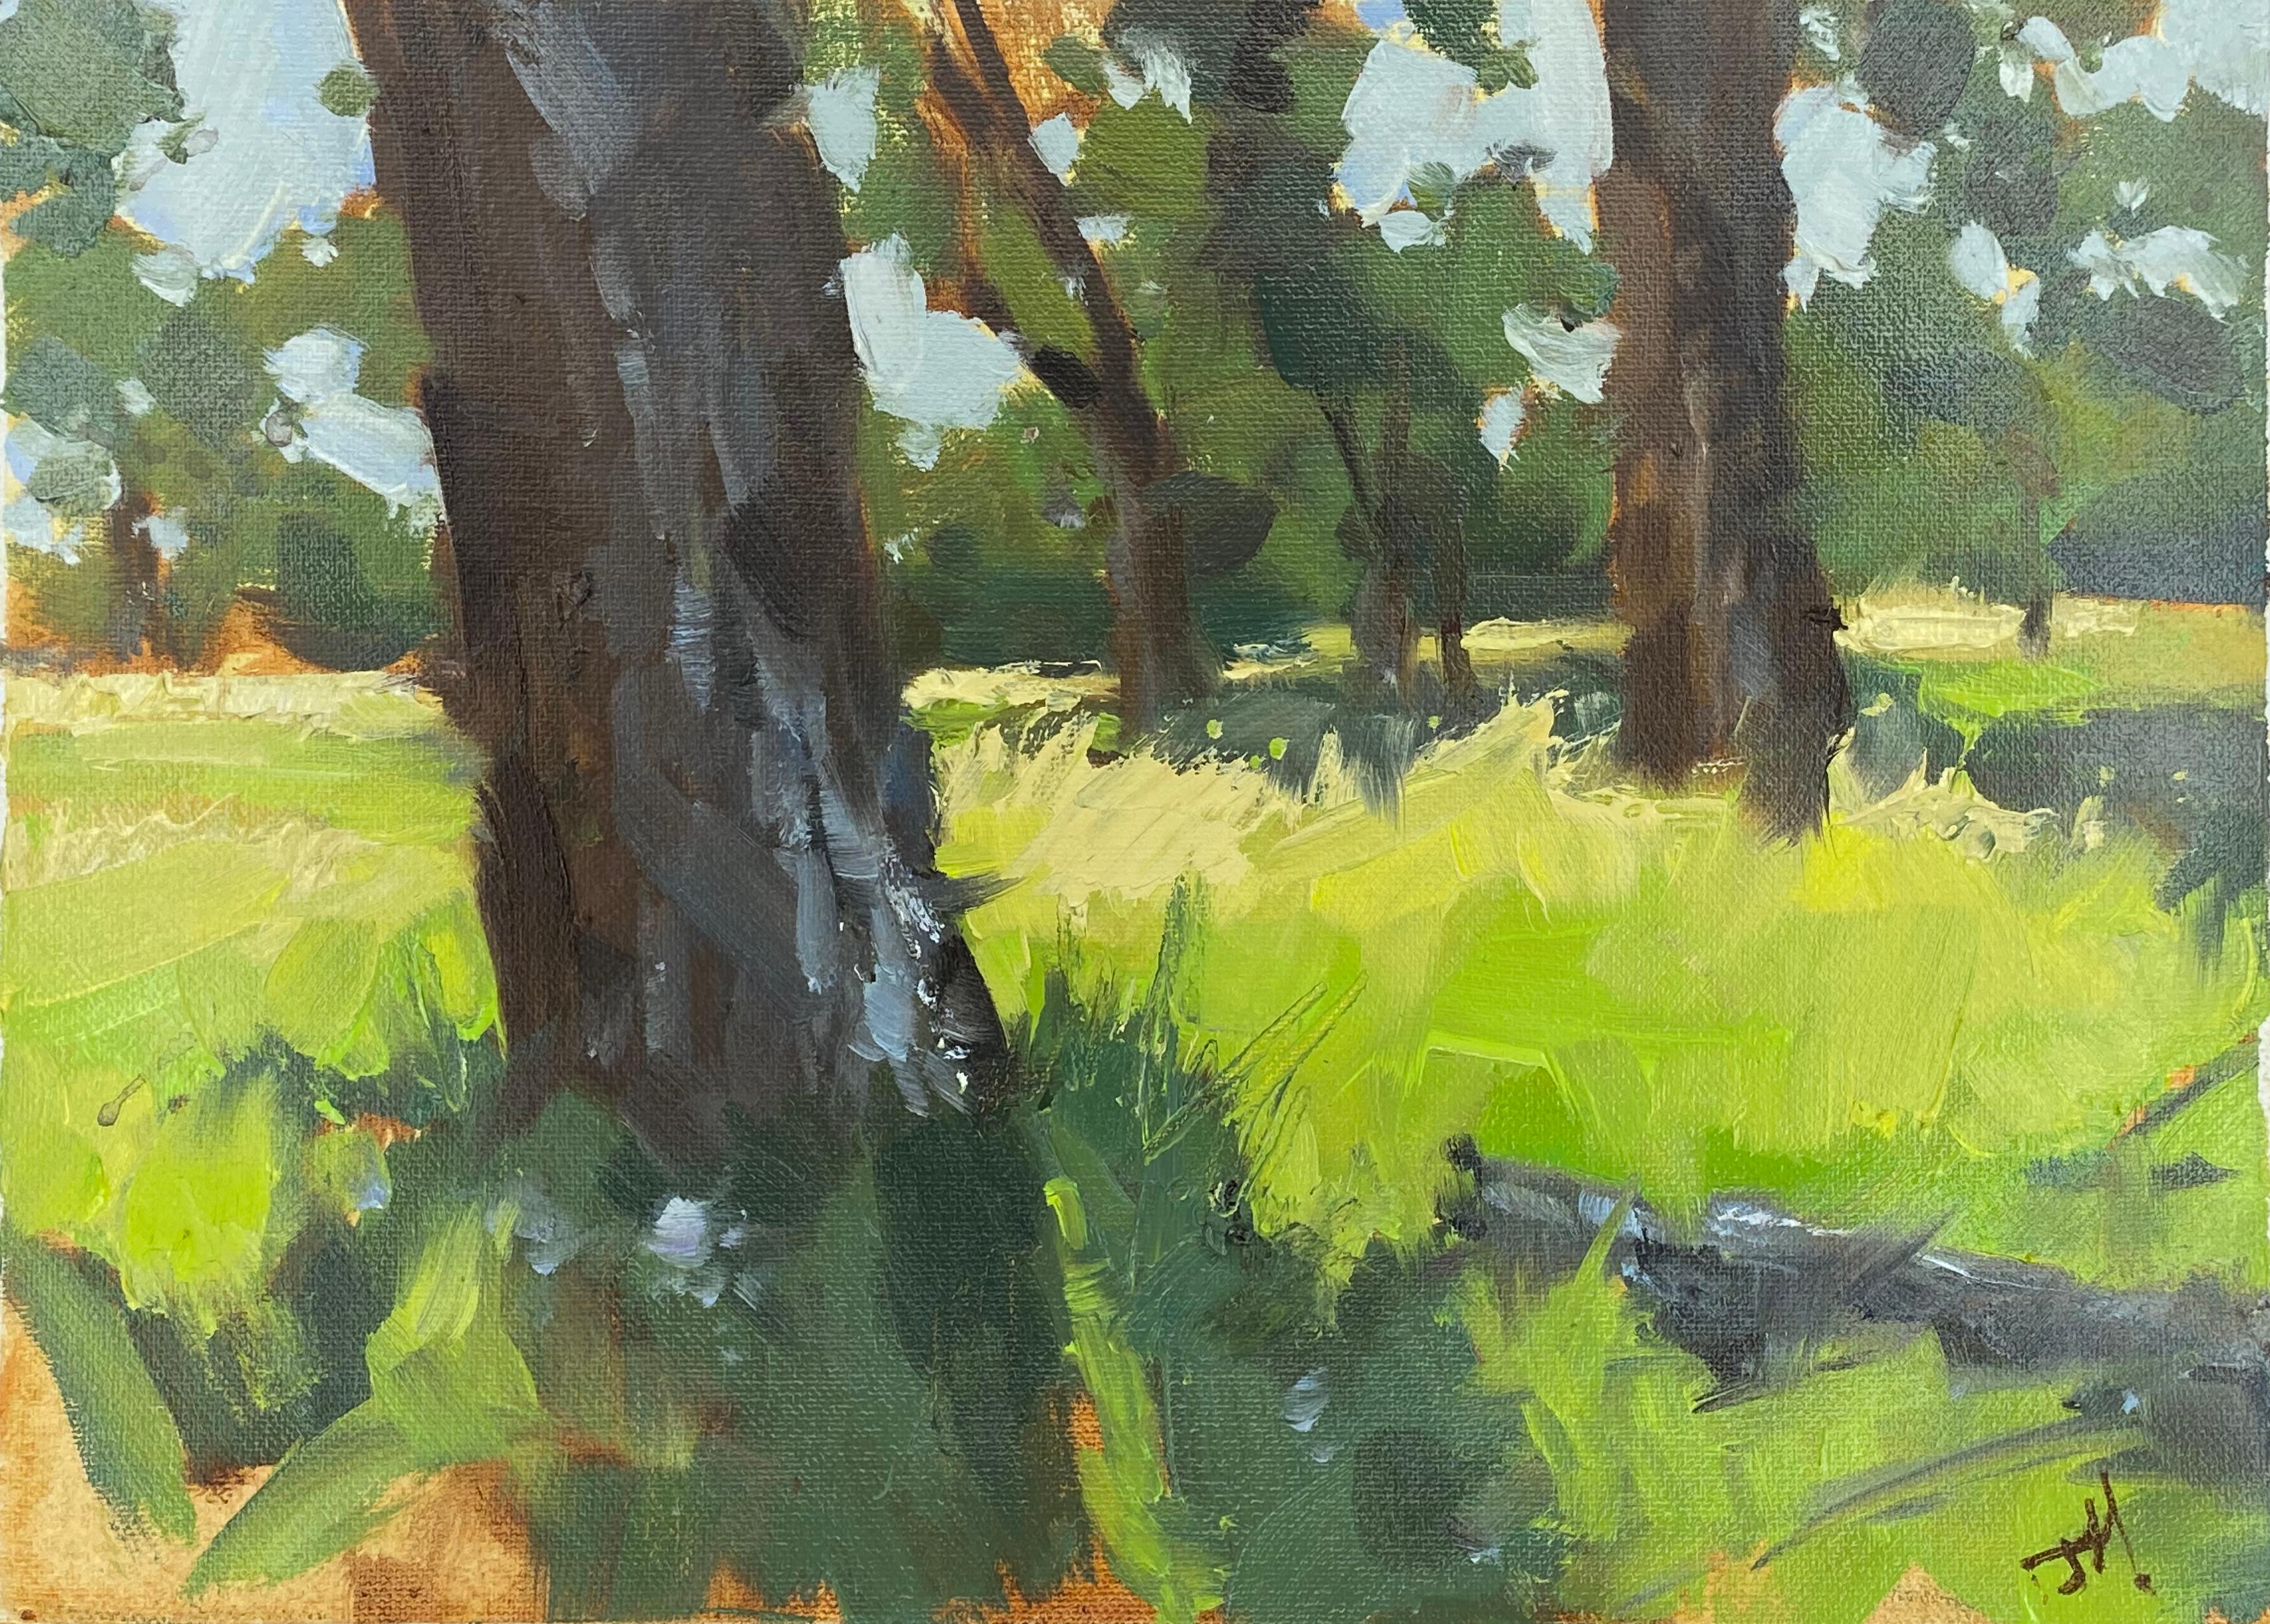 Judd Mercer Landscape Painting - "Grass Underfoot" Gouache Painting